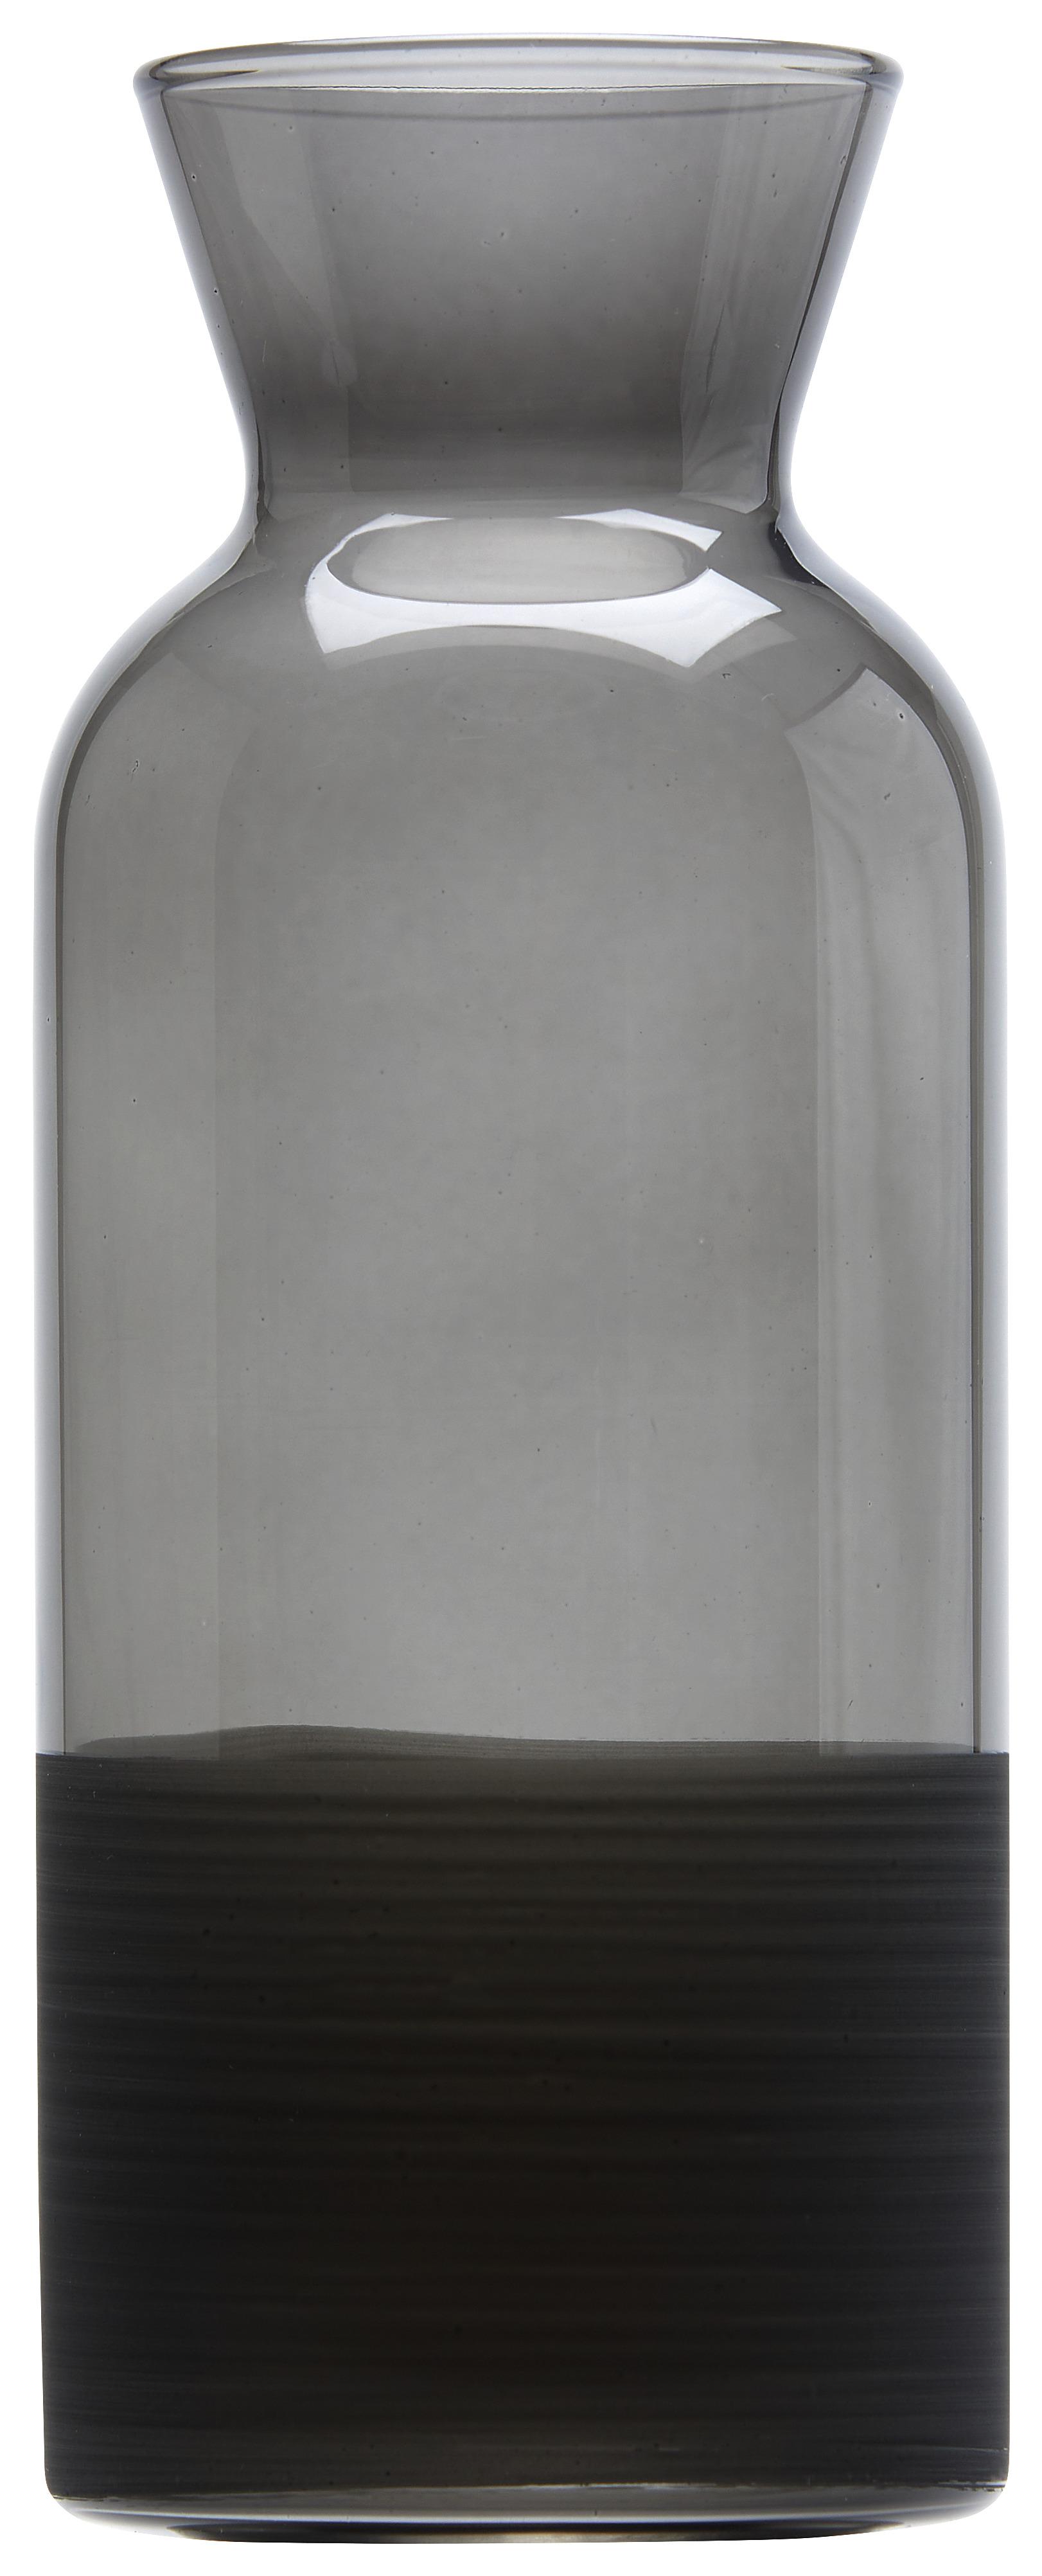 Karaffe Black ca. 700ml - Schwarz, Modern, Glas (700ml) - Premium Living